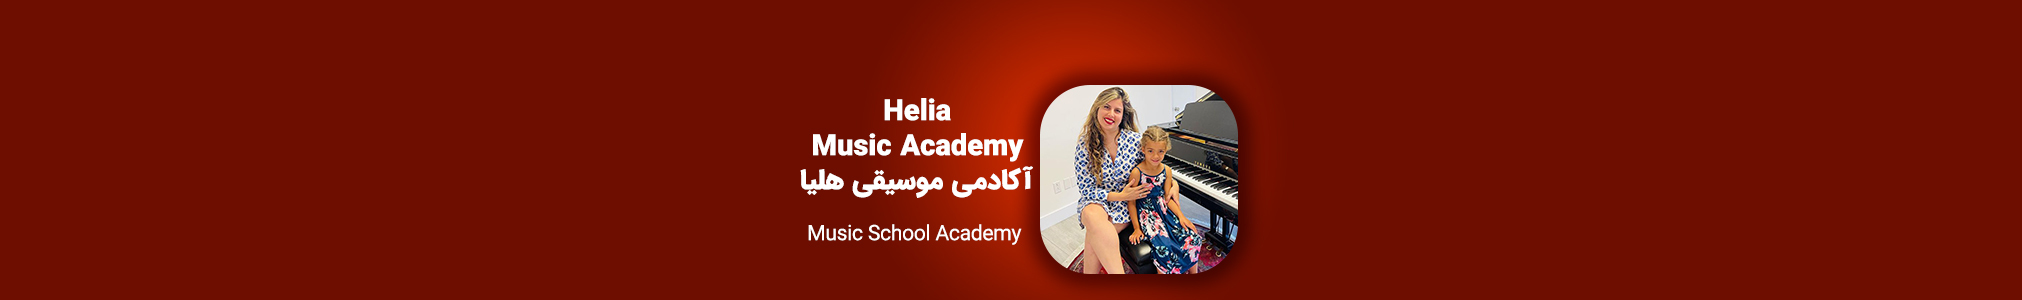 Helia Music Academy